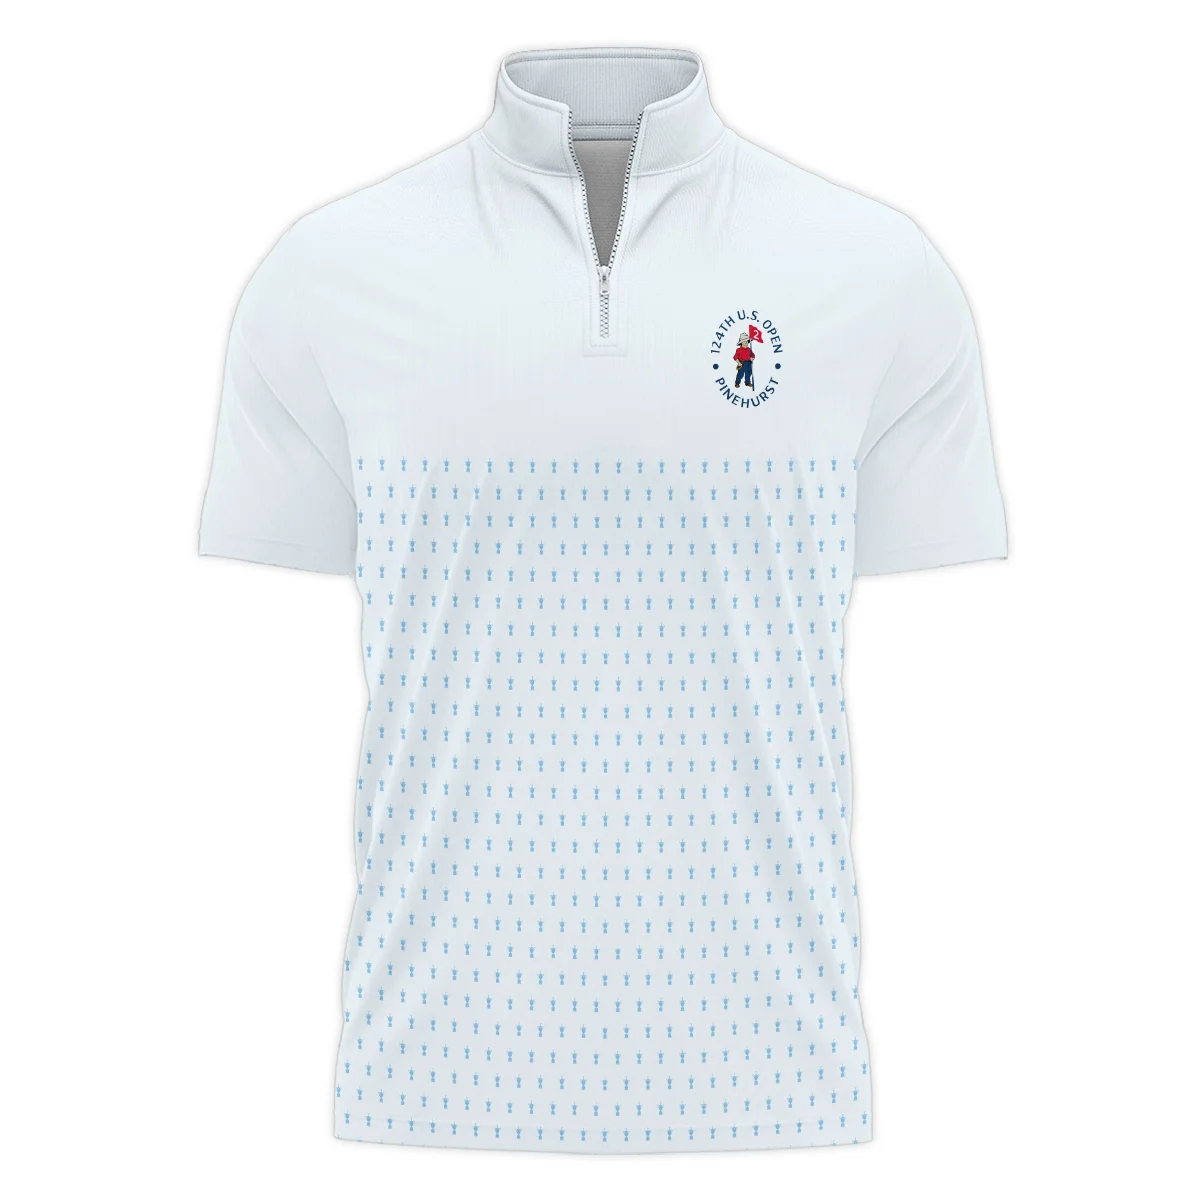 U.S Open Trophy Pattern Light Blue 124th U.S. Open Pinehurst Callaway Vneck Polo Shirt Style Classic Polo Shirt For Men